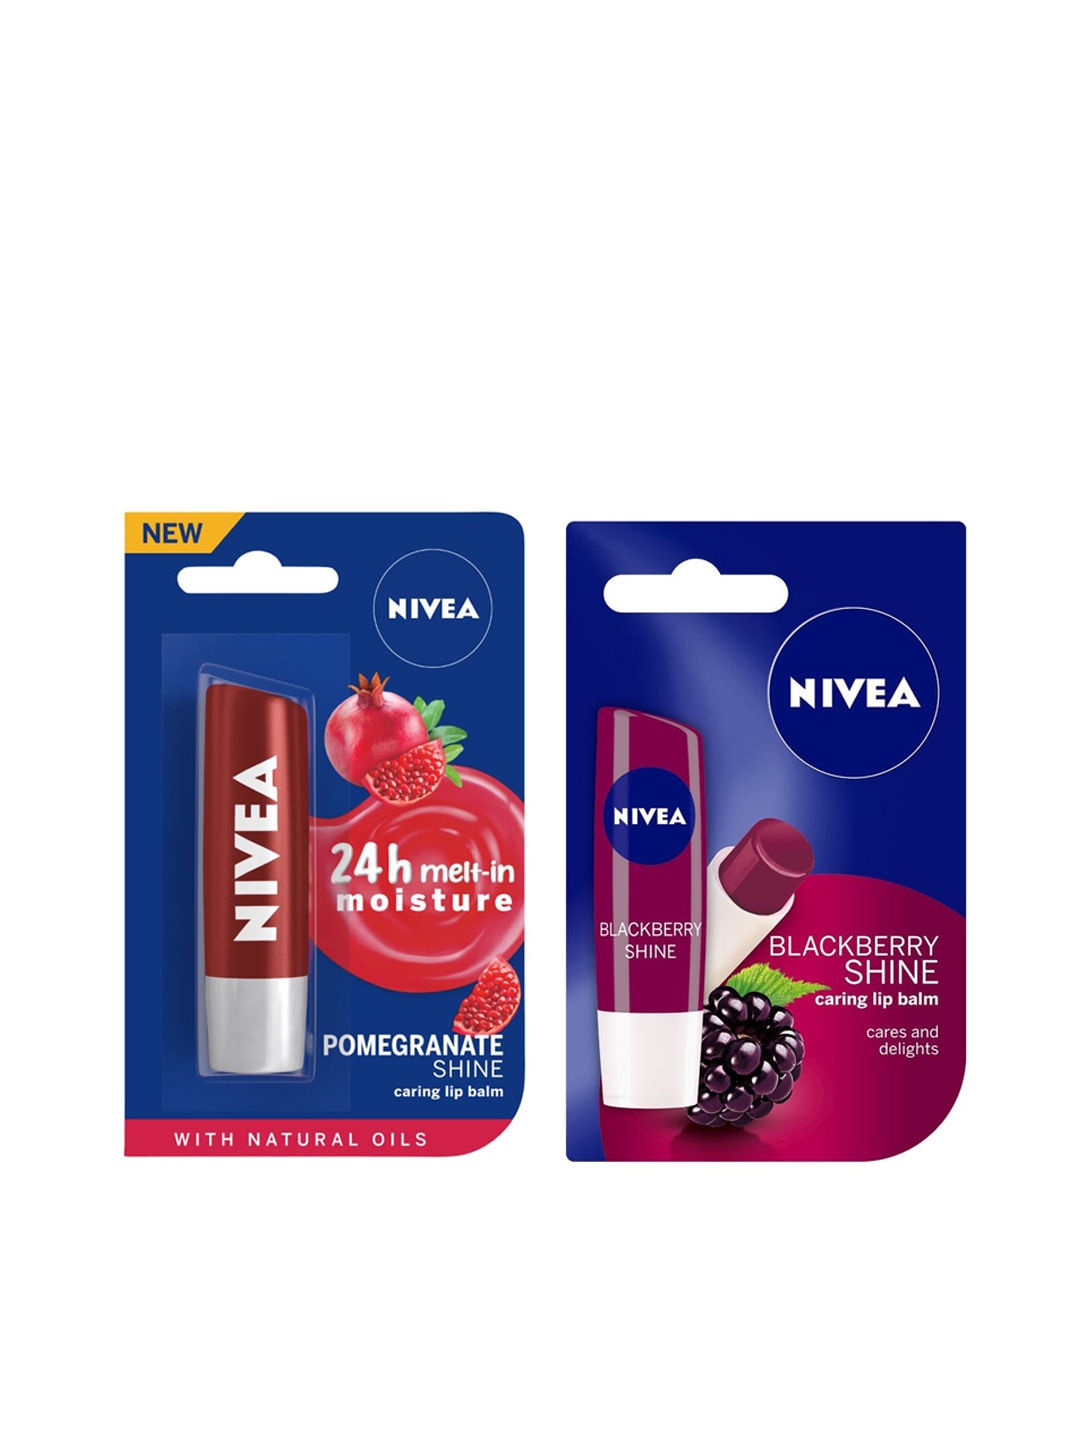 Nivea Set of Pomegranate Shine & Blackberry Shine Caring Lip Balms Price in India